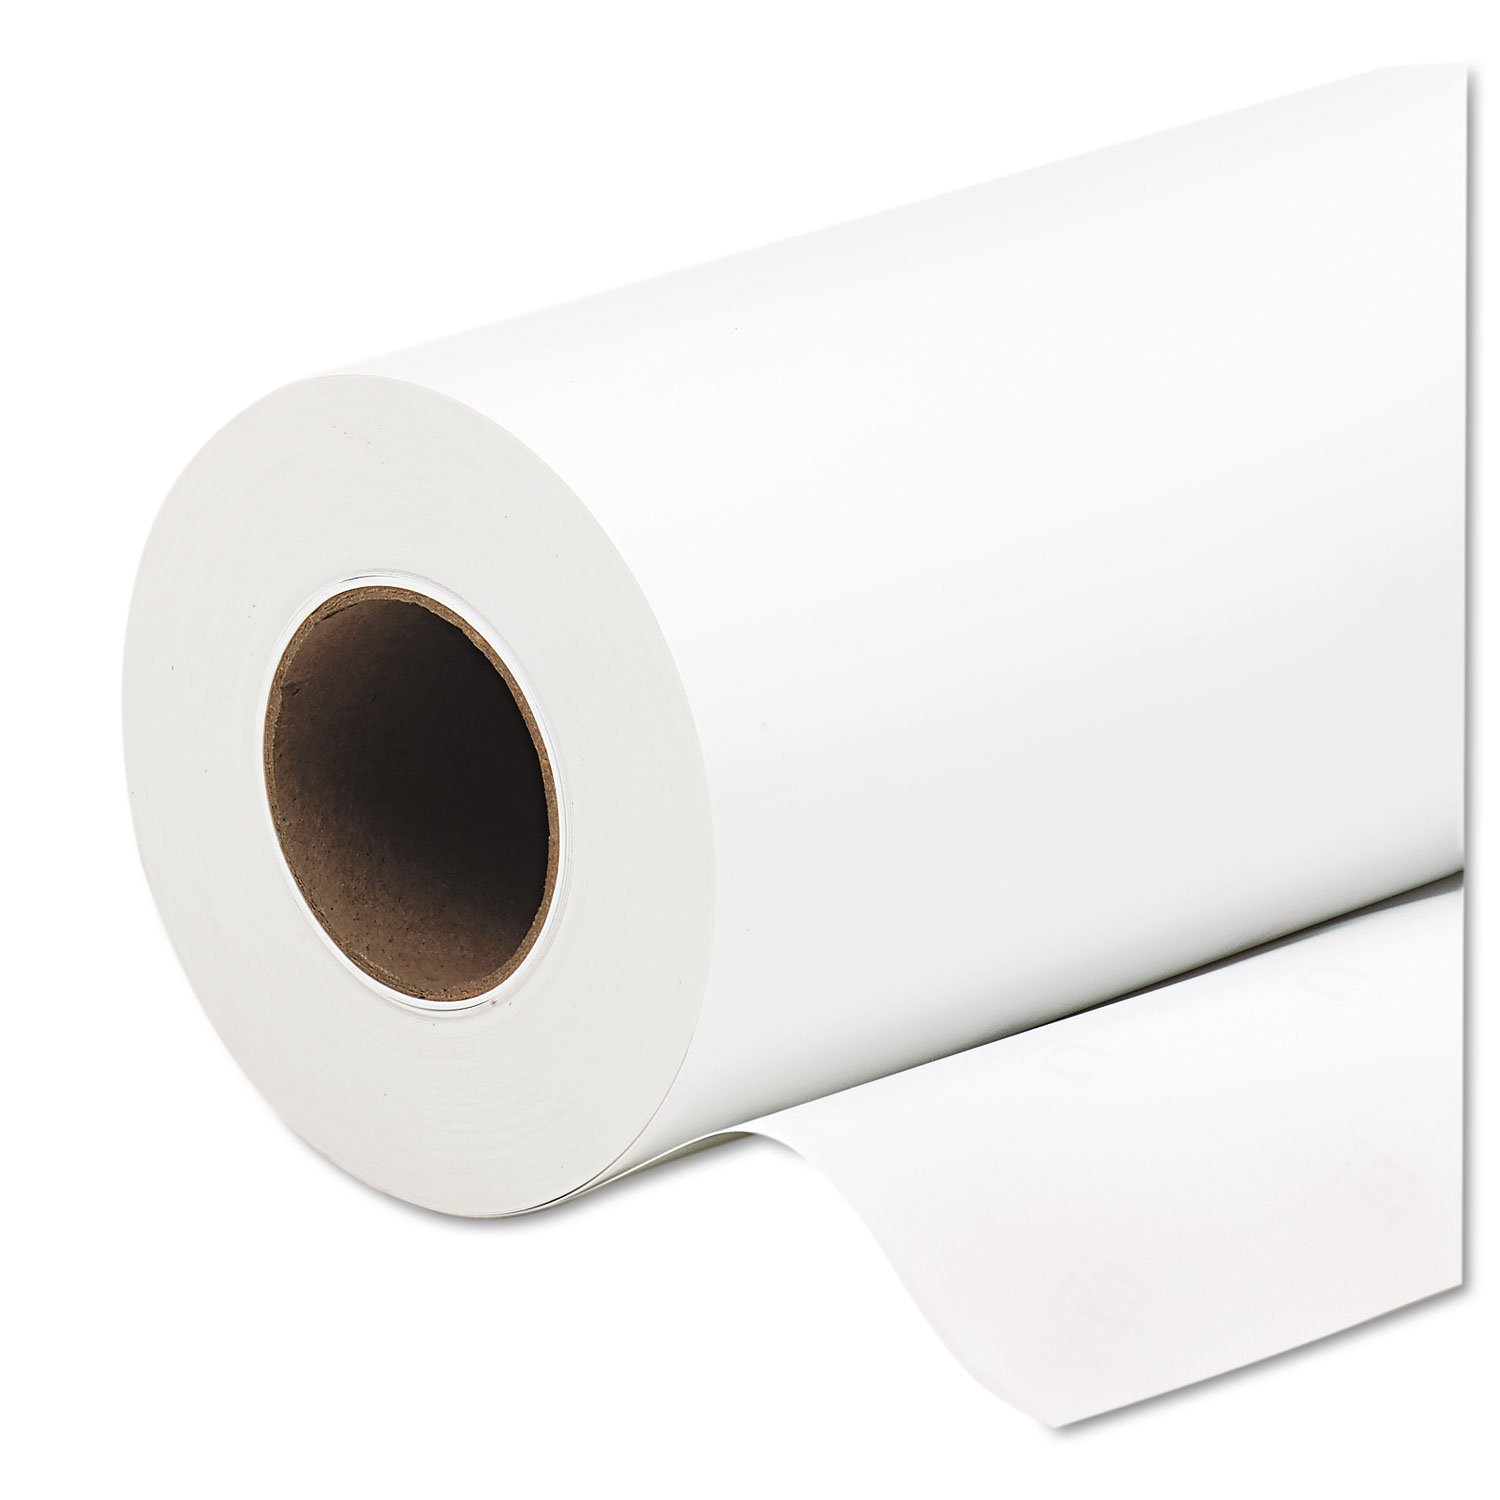 Premium Photo Paper Rolls, 55 lbs., Matte, 36 x 100 ft, Roll